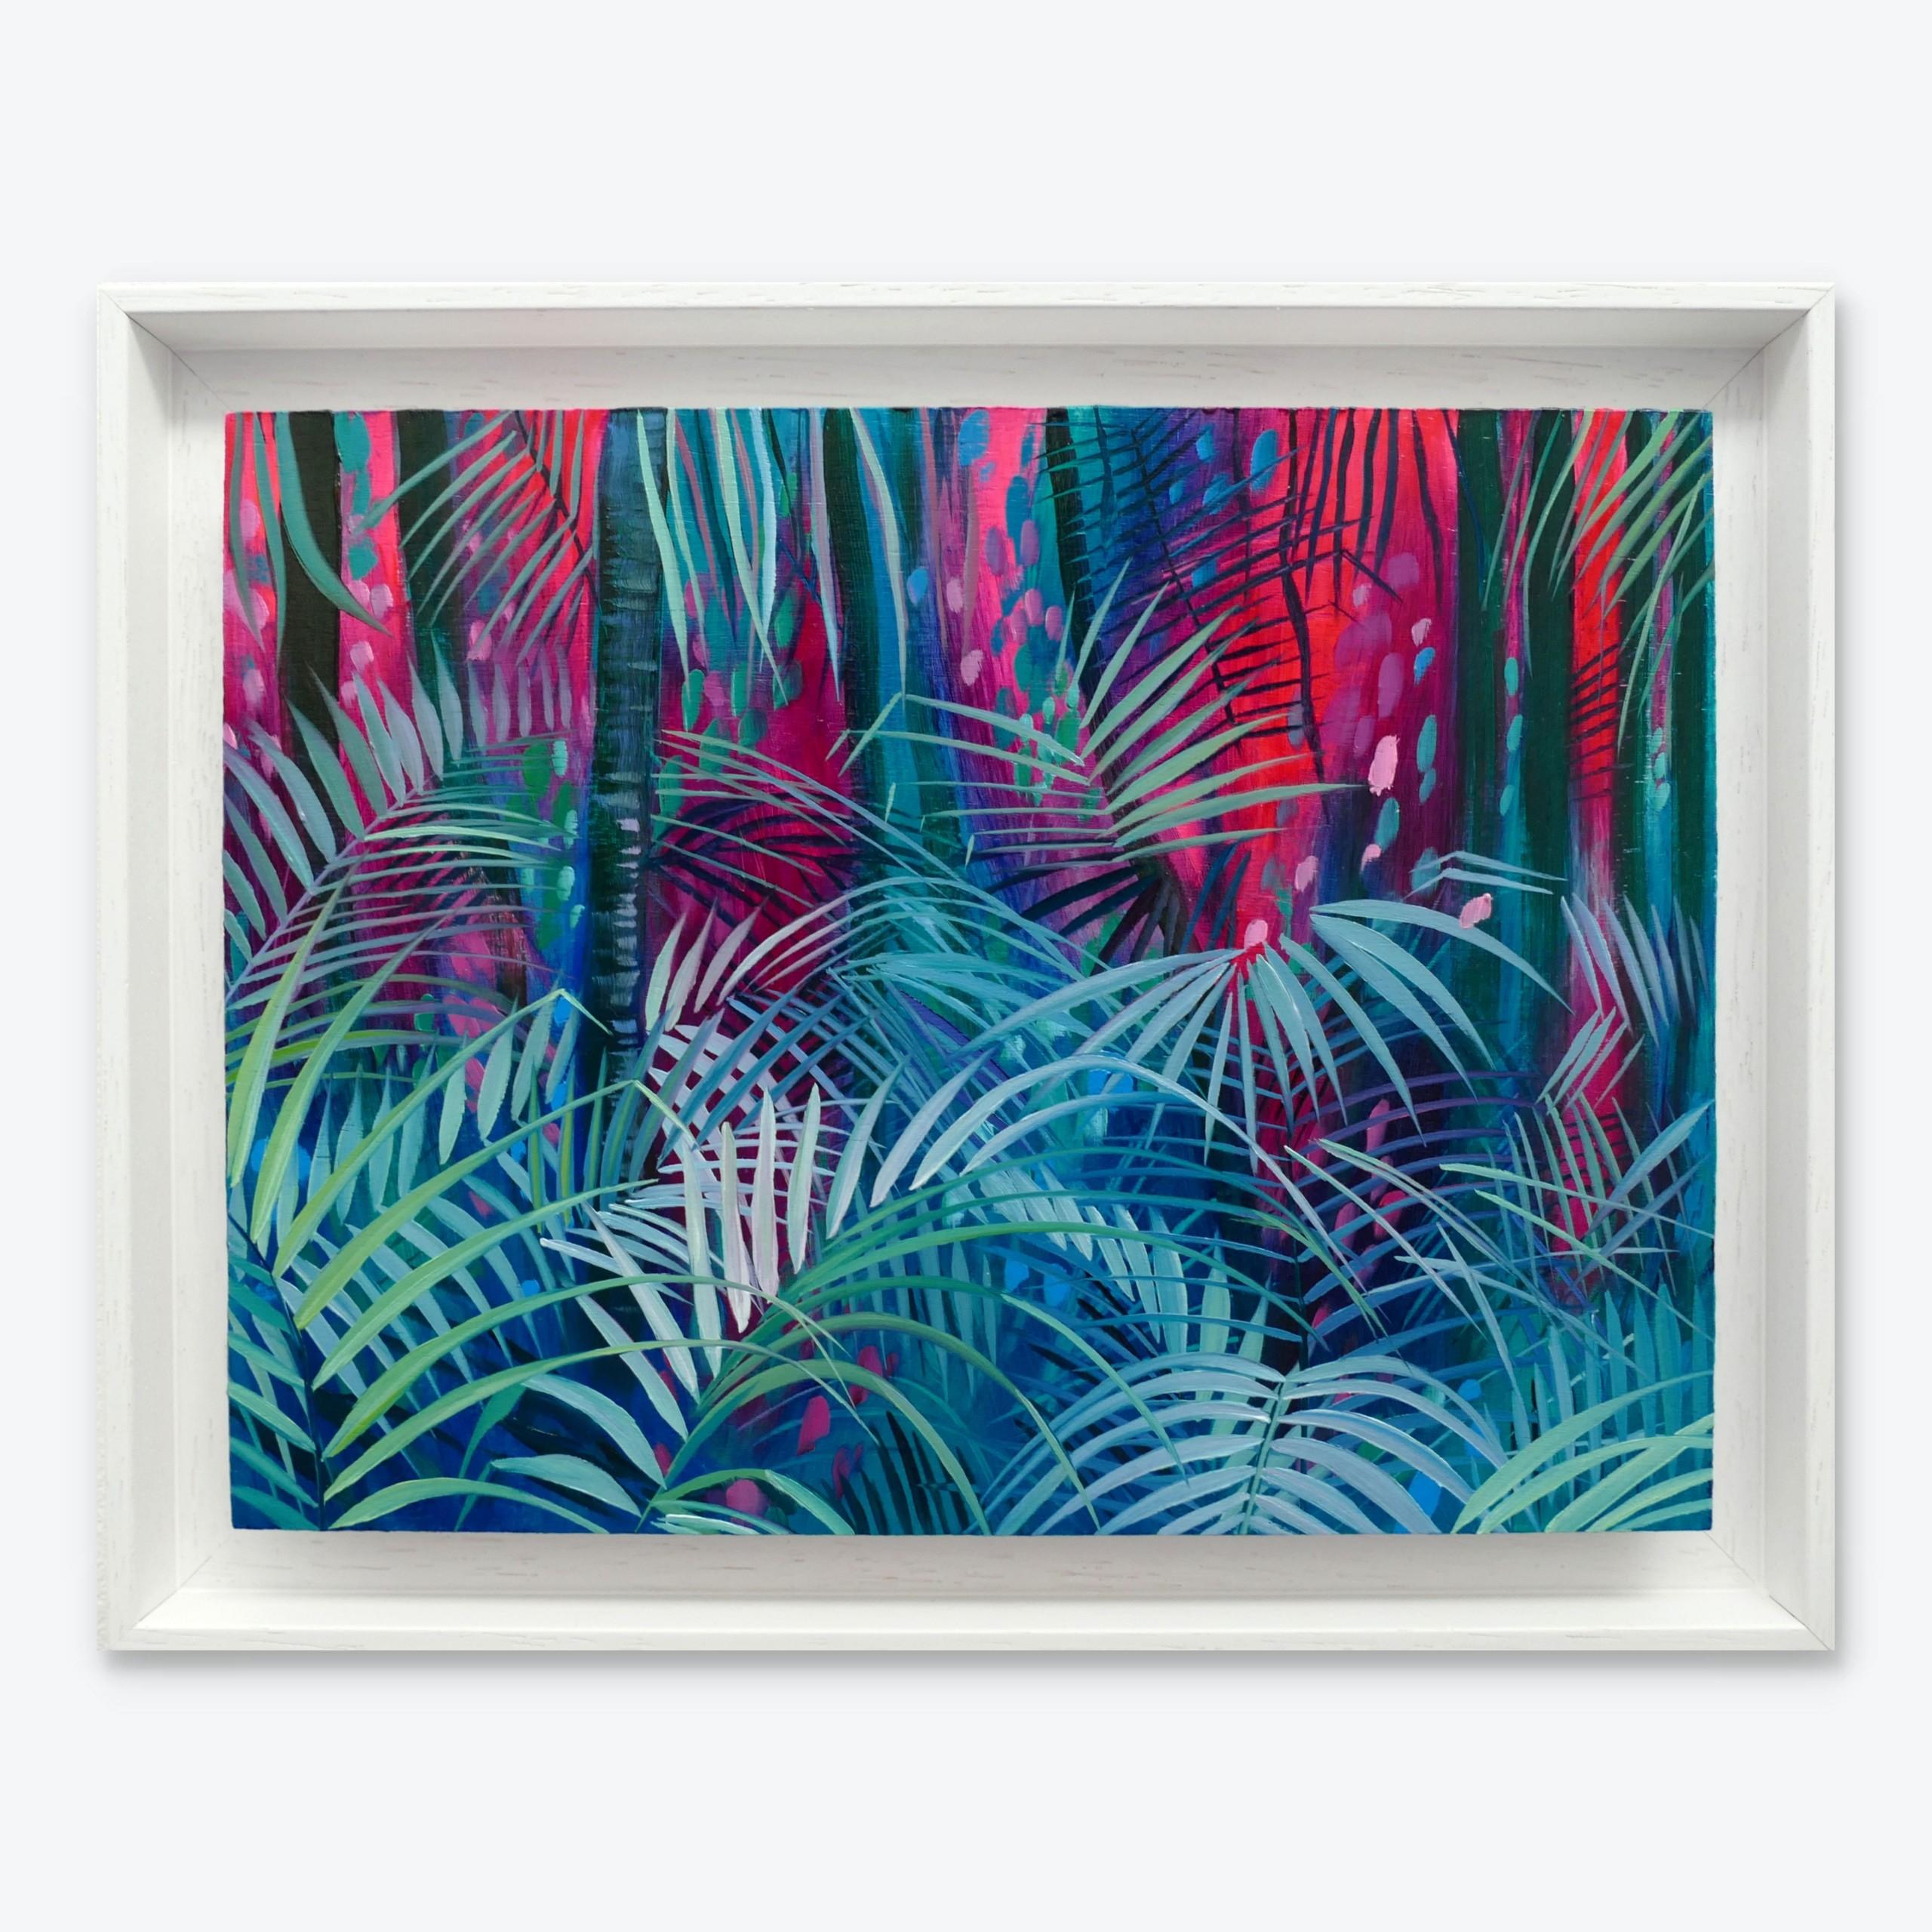 Dschungel Paradies, Landschaftskunst, kühnes Original-Ölgemälde, gerahmtes Kunstwerk (Abstrakter Impressionismus), Painting, von Alanna Eakin